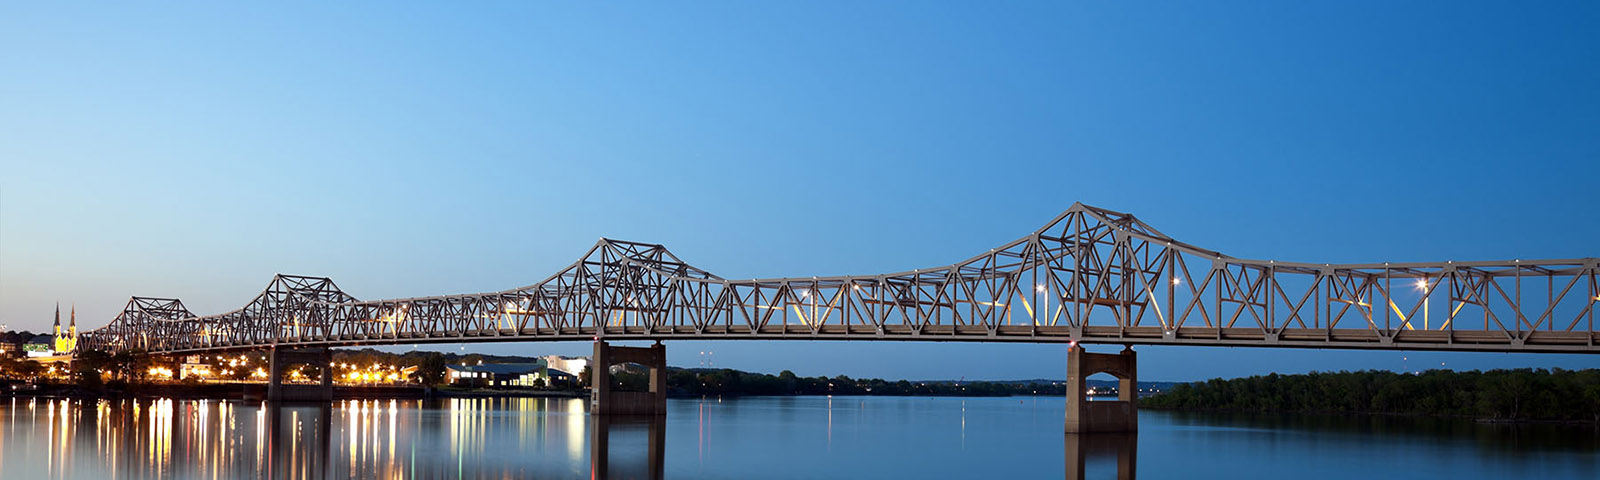 The Peoria Bridge spanning over the river.